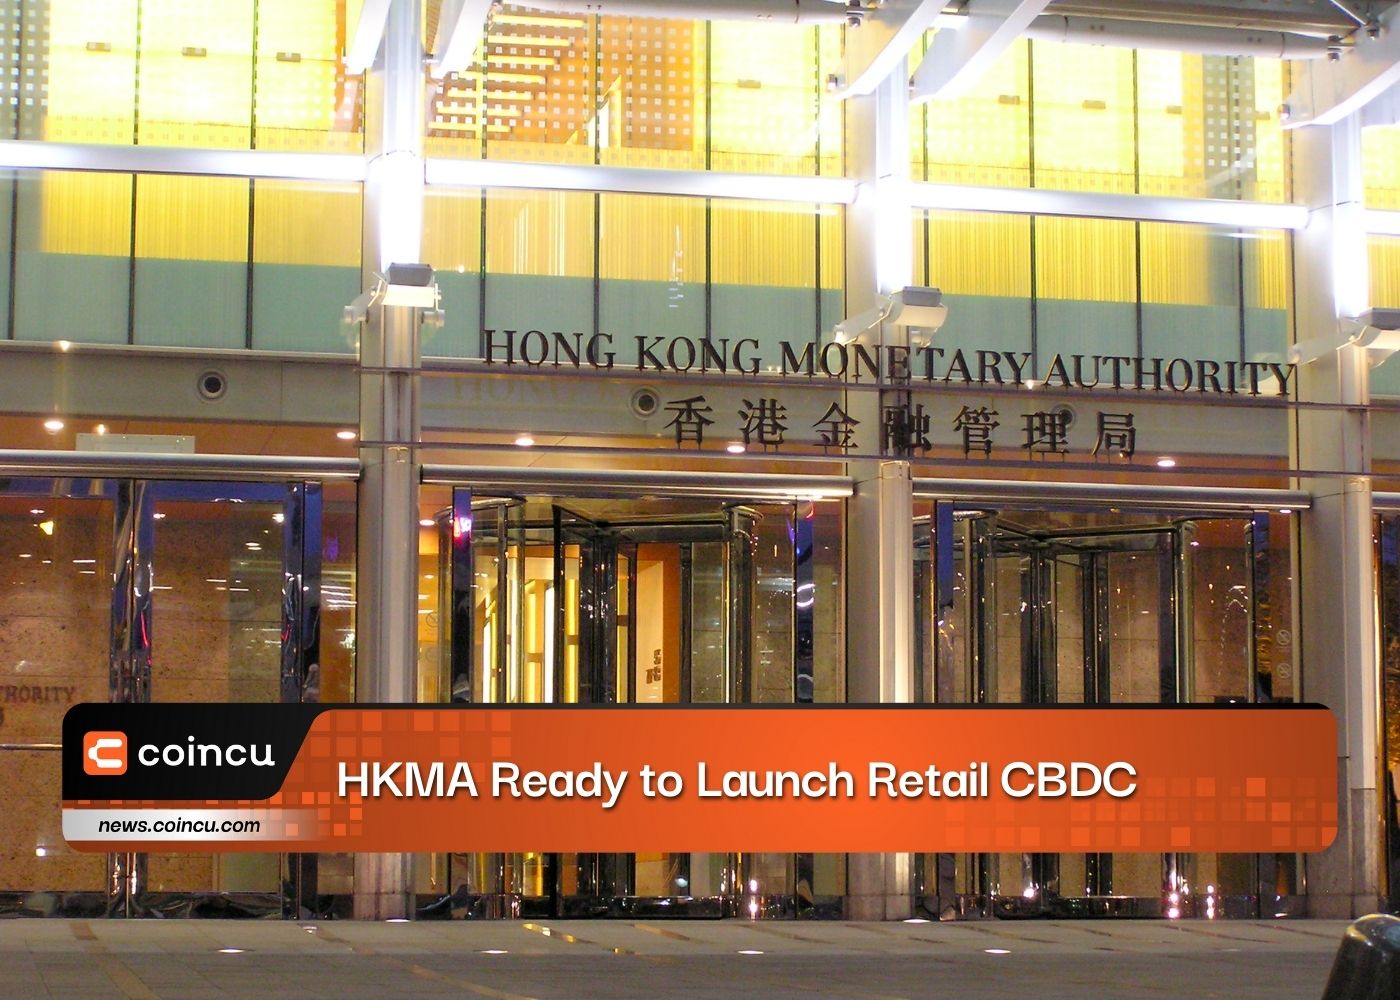 HKMA Ready To Launch Retail CBDC